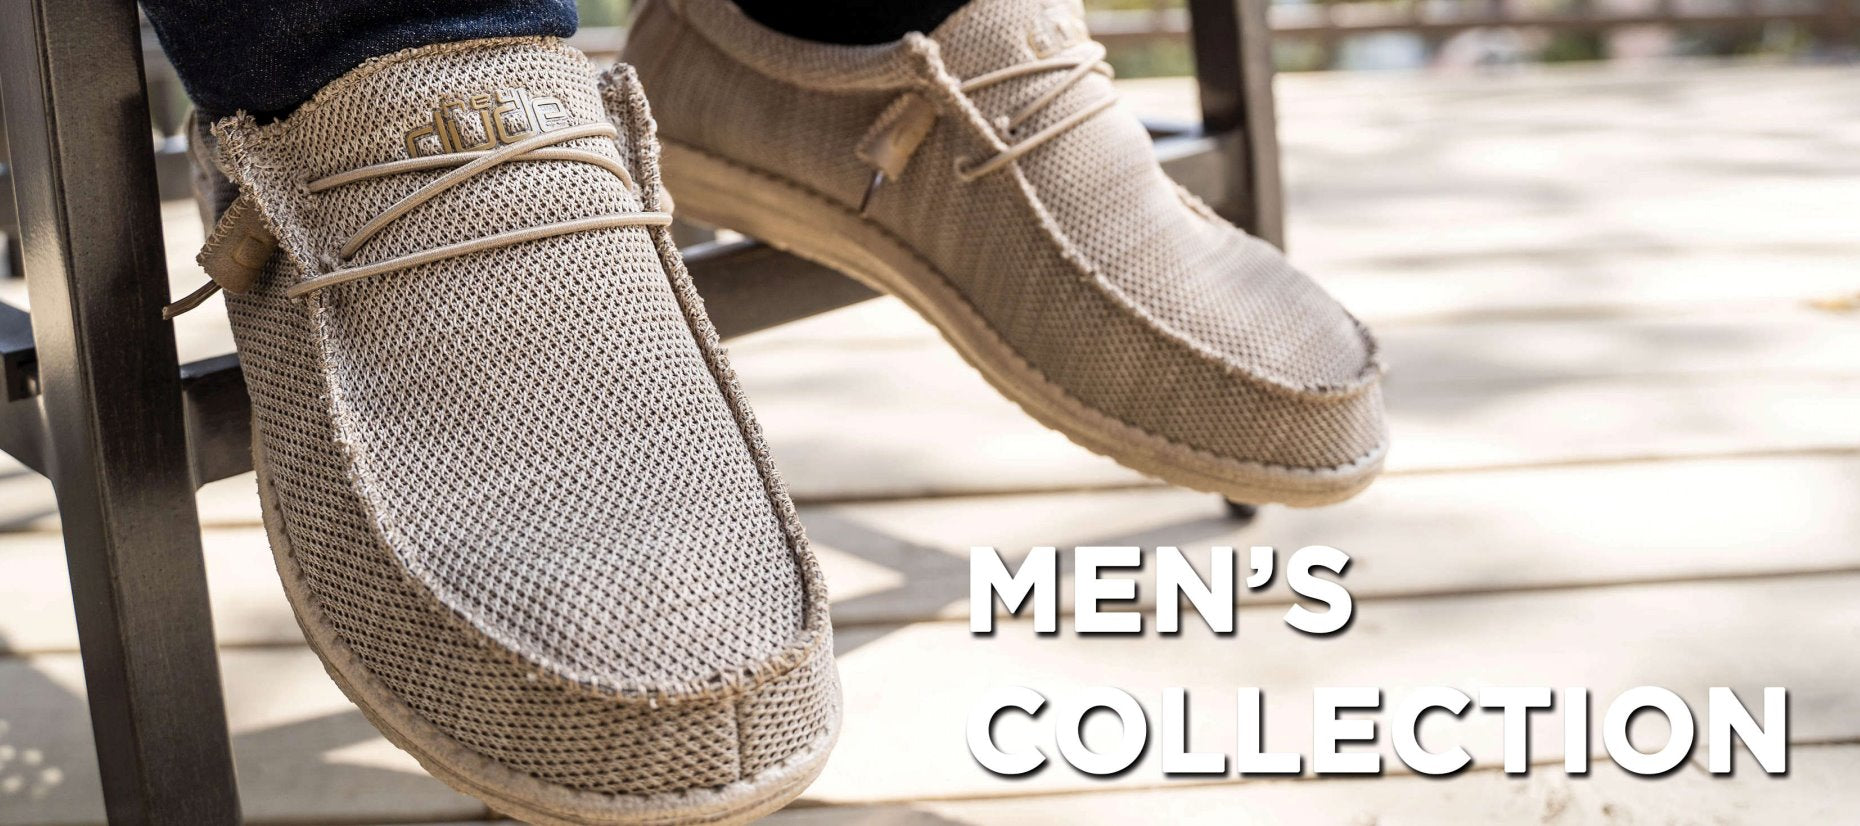 Men's Casual - Becker's Best Shoes